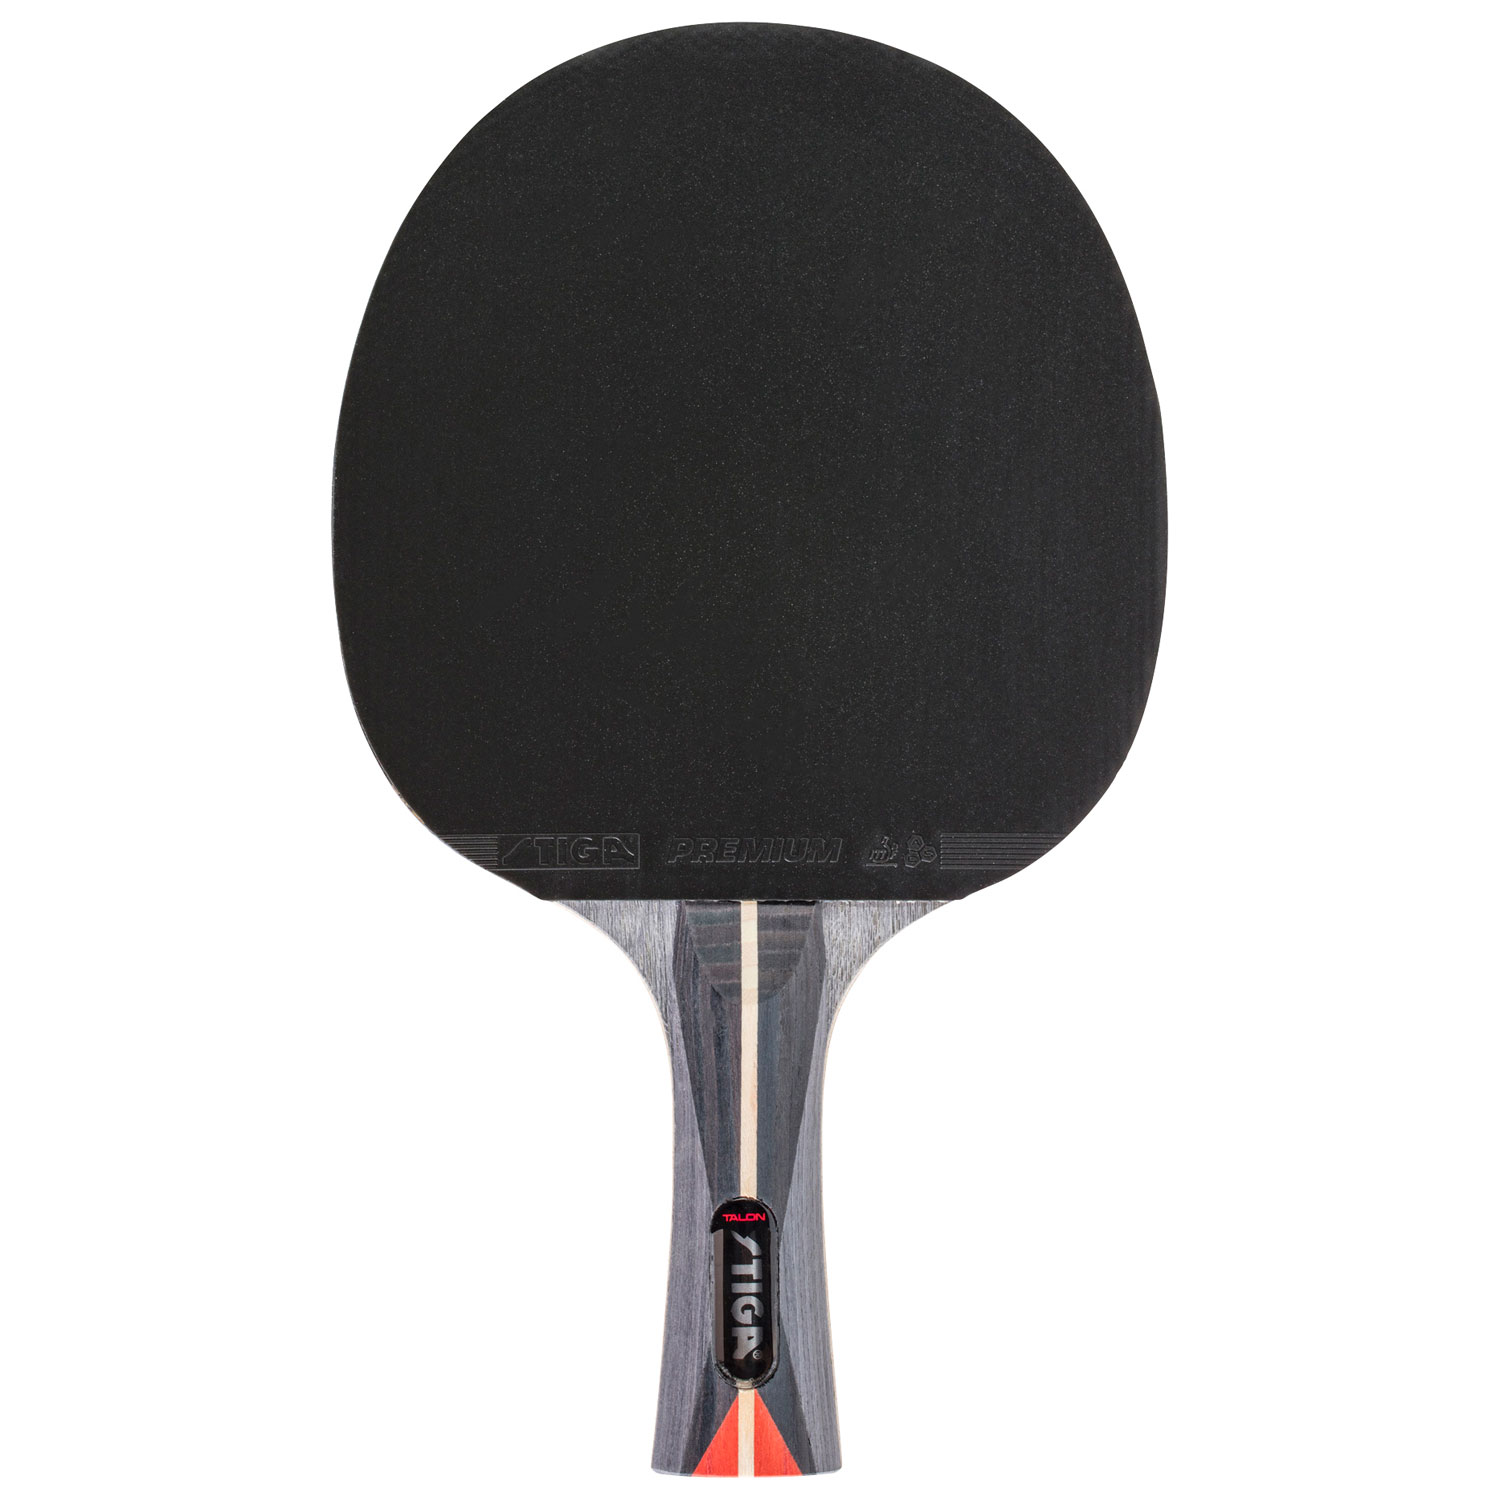 Stiga Talon Table Tennis Racket (T1282) - Black